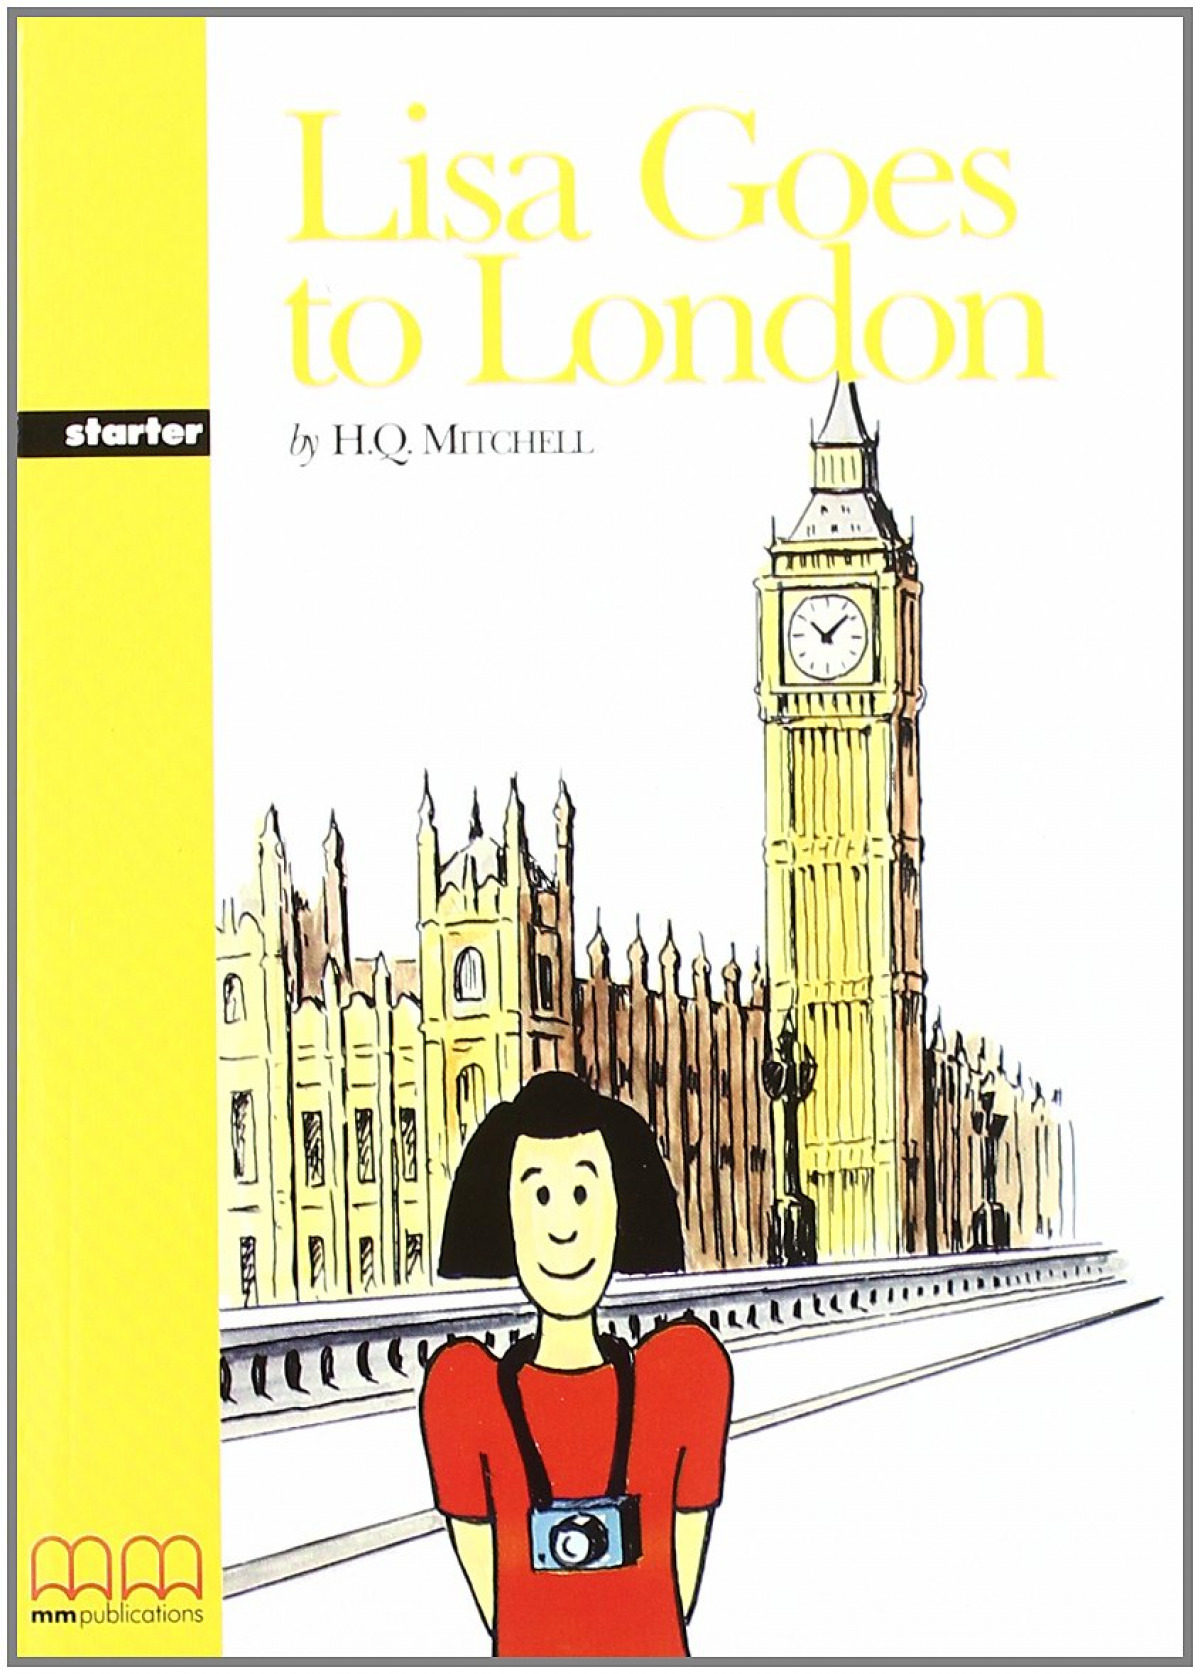 Lisa goes to london starter book +activity +cd - Graded Readers Starter Original Stories